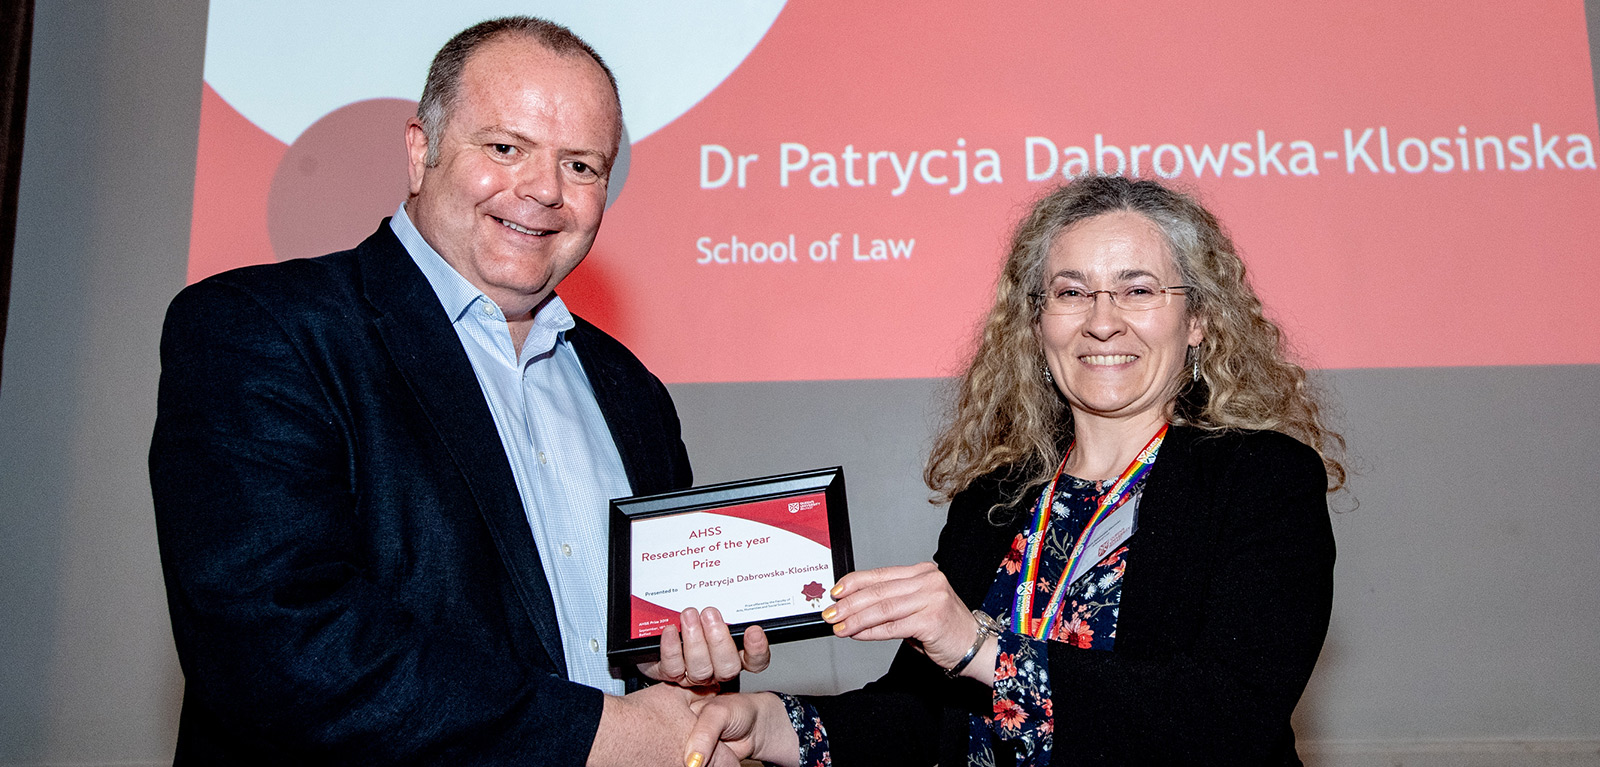 Dr Patrycja Dąbrowska-Kłosińska receiving award from Professor Paul Connolly